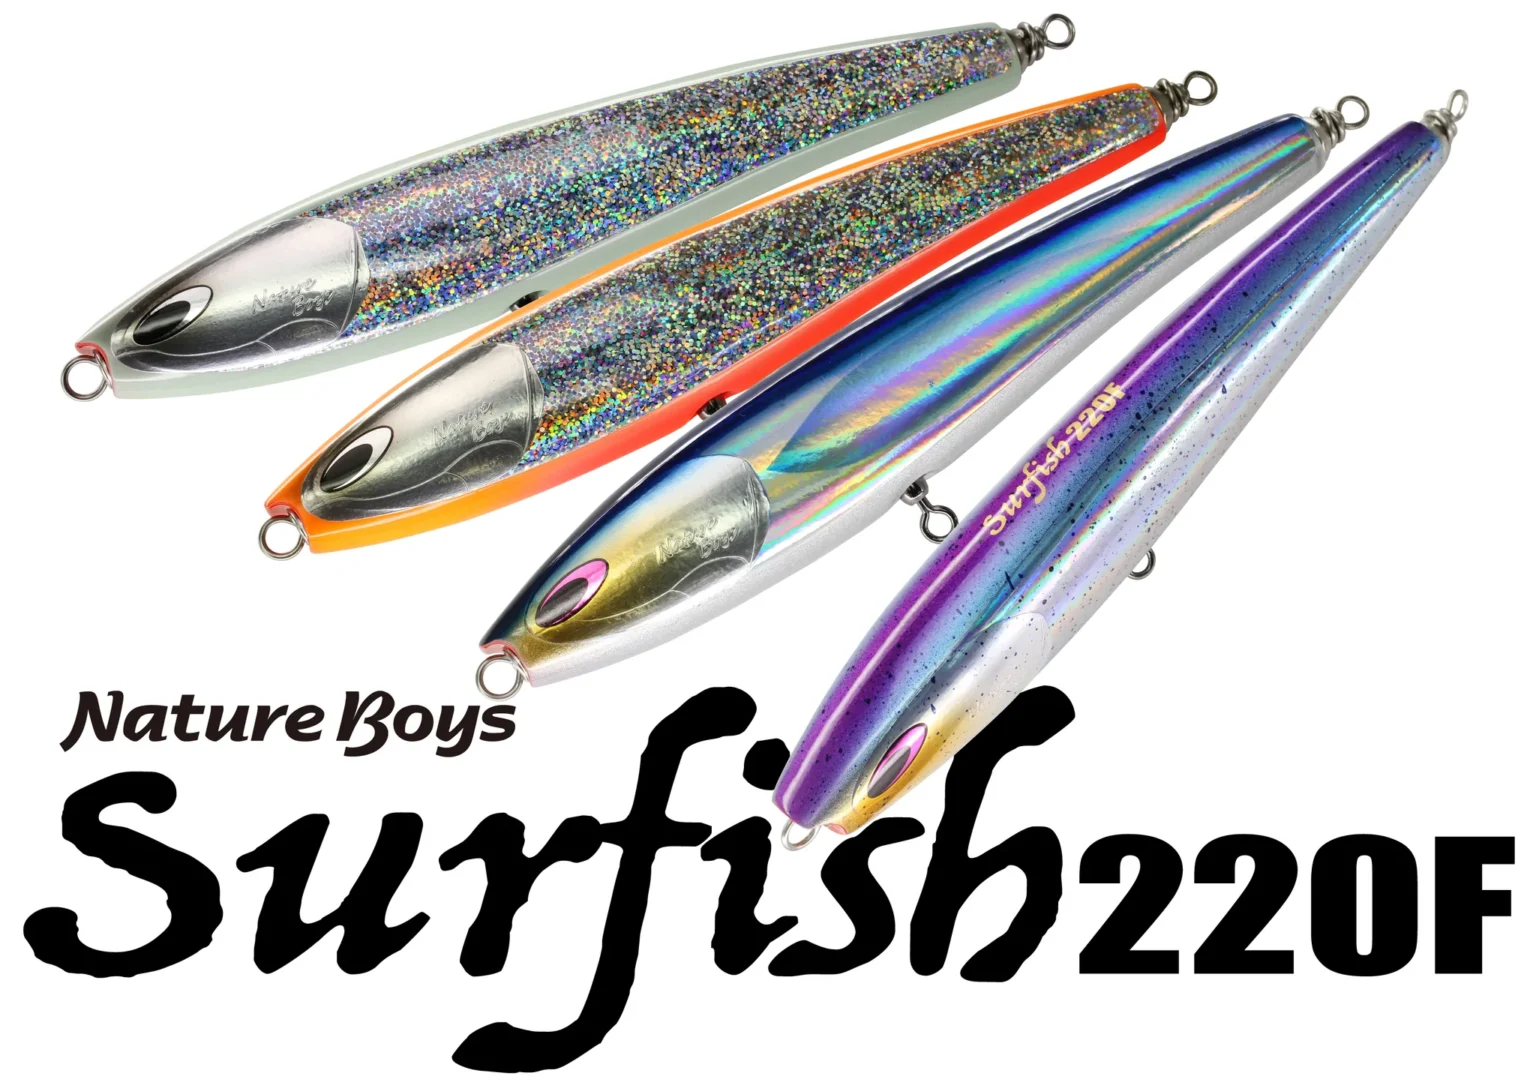 Nature Boys Surfish 220F